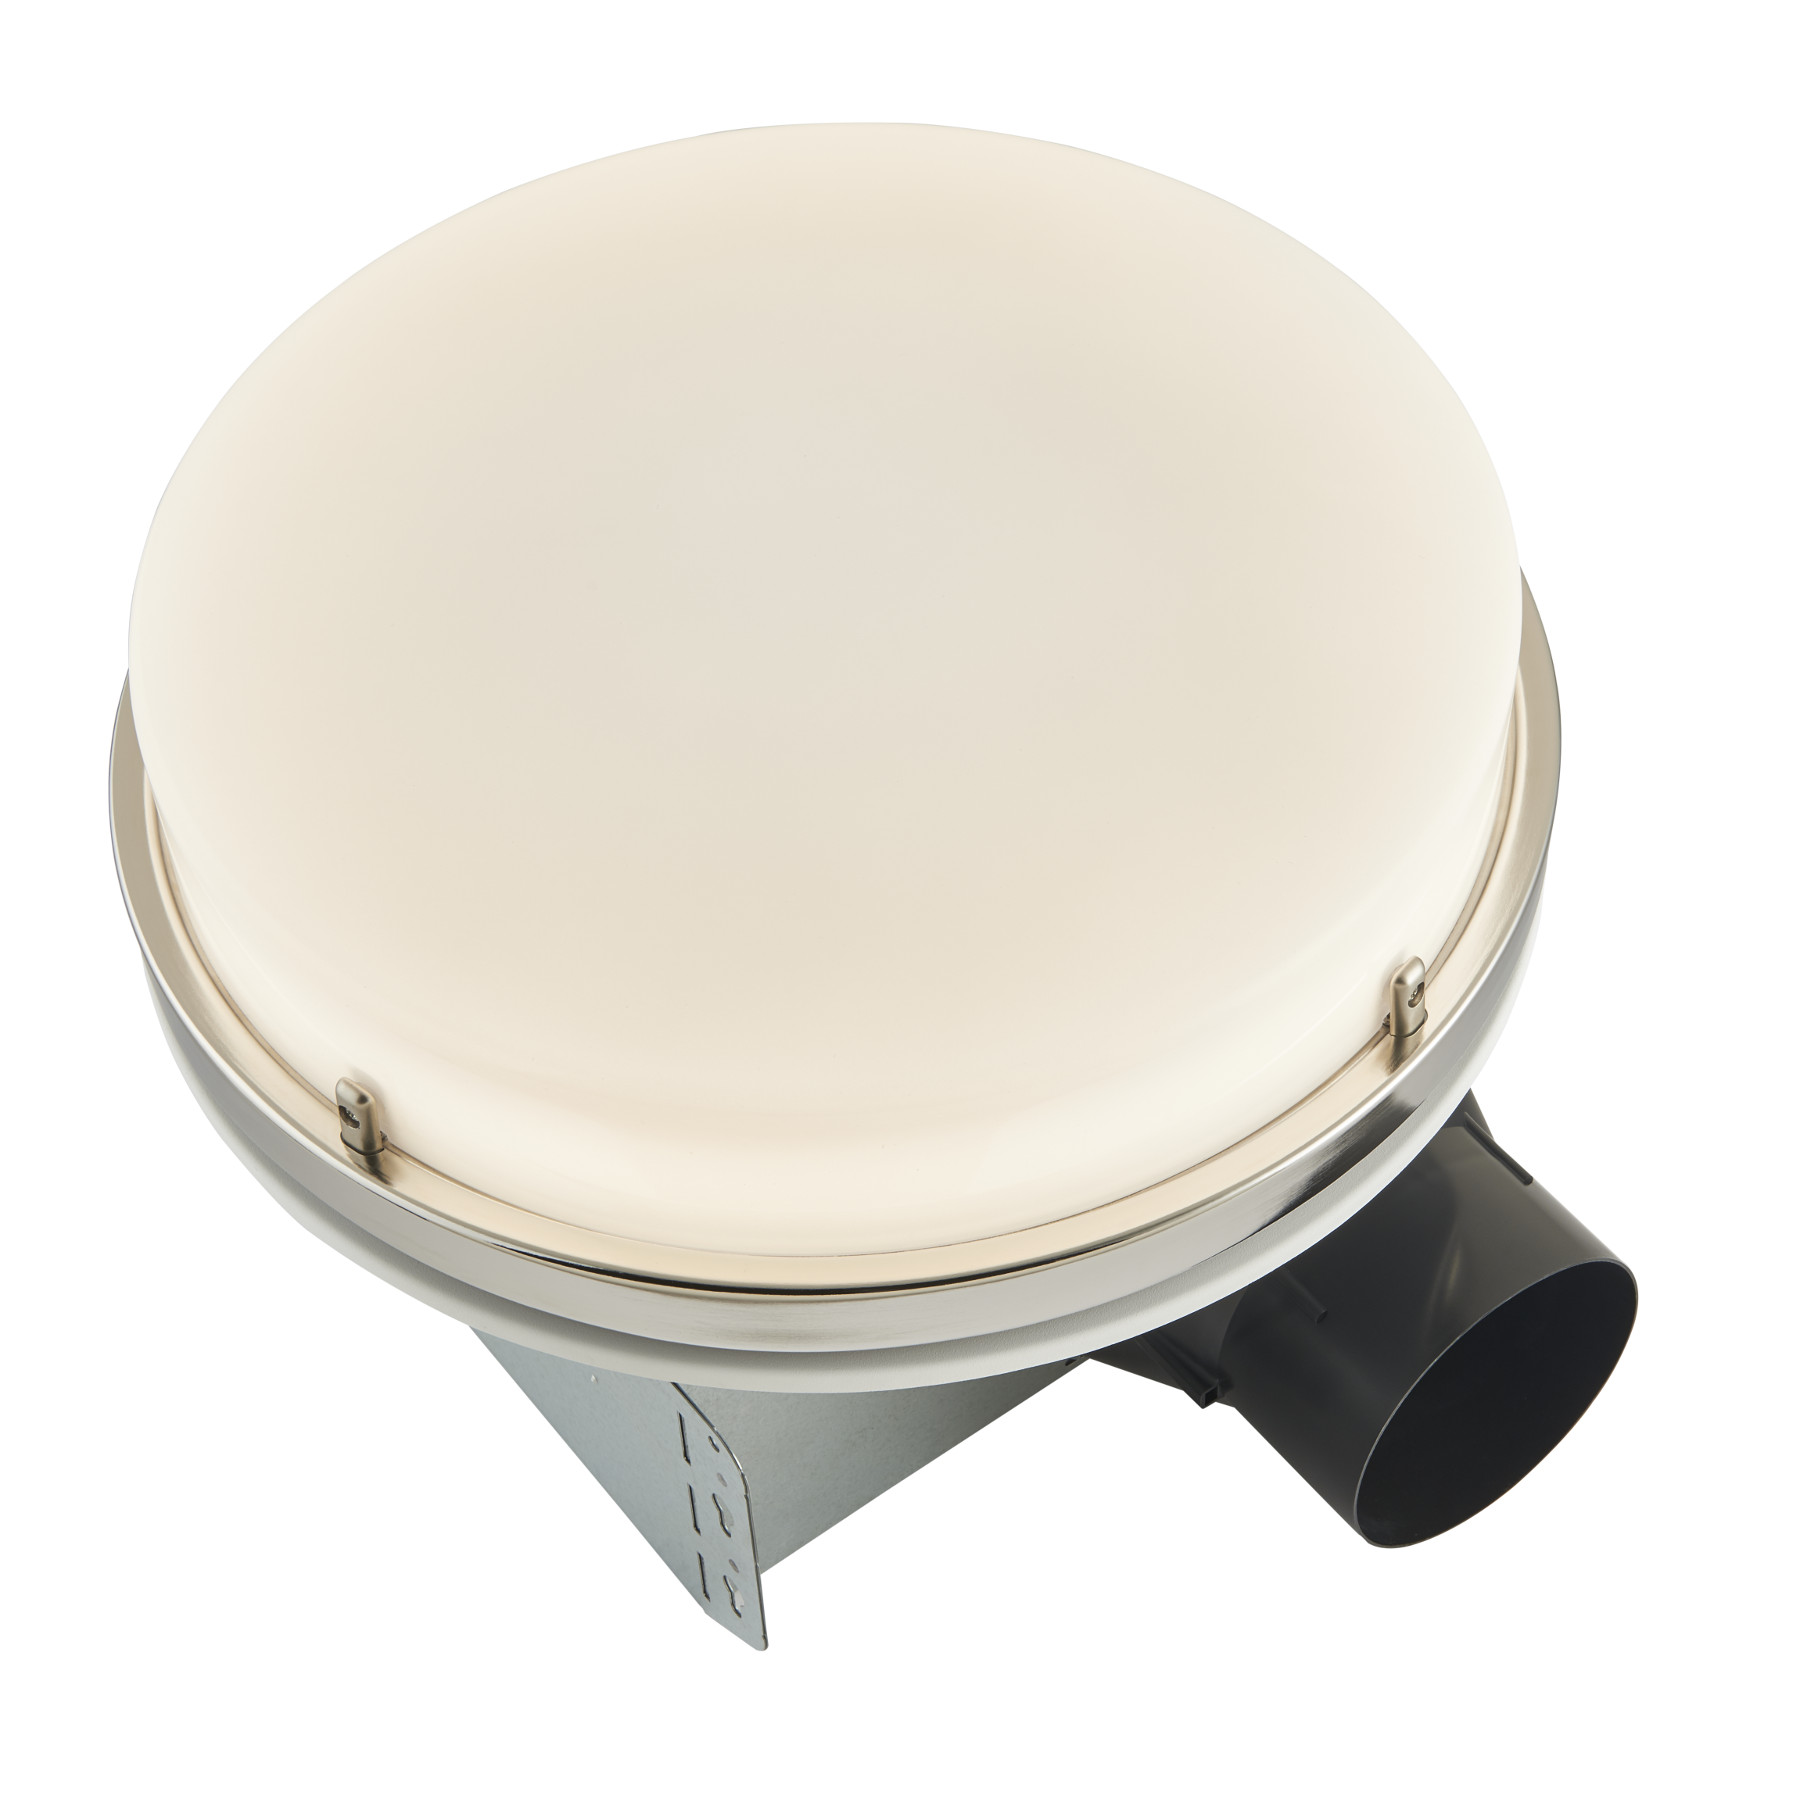 Broan® 110 CFM Decorative Bathroom Ventilation Fan with LED Light in Brushed Nickel, 1.5 Sones,  ENERGY STAR Certified